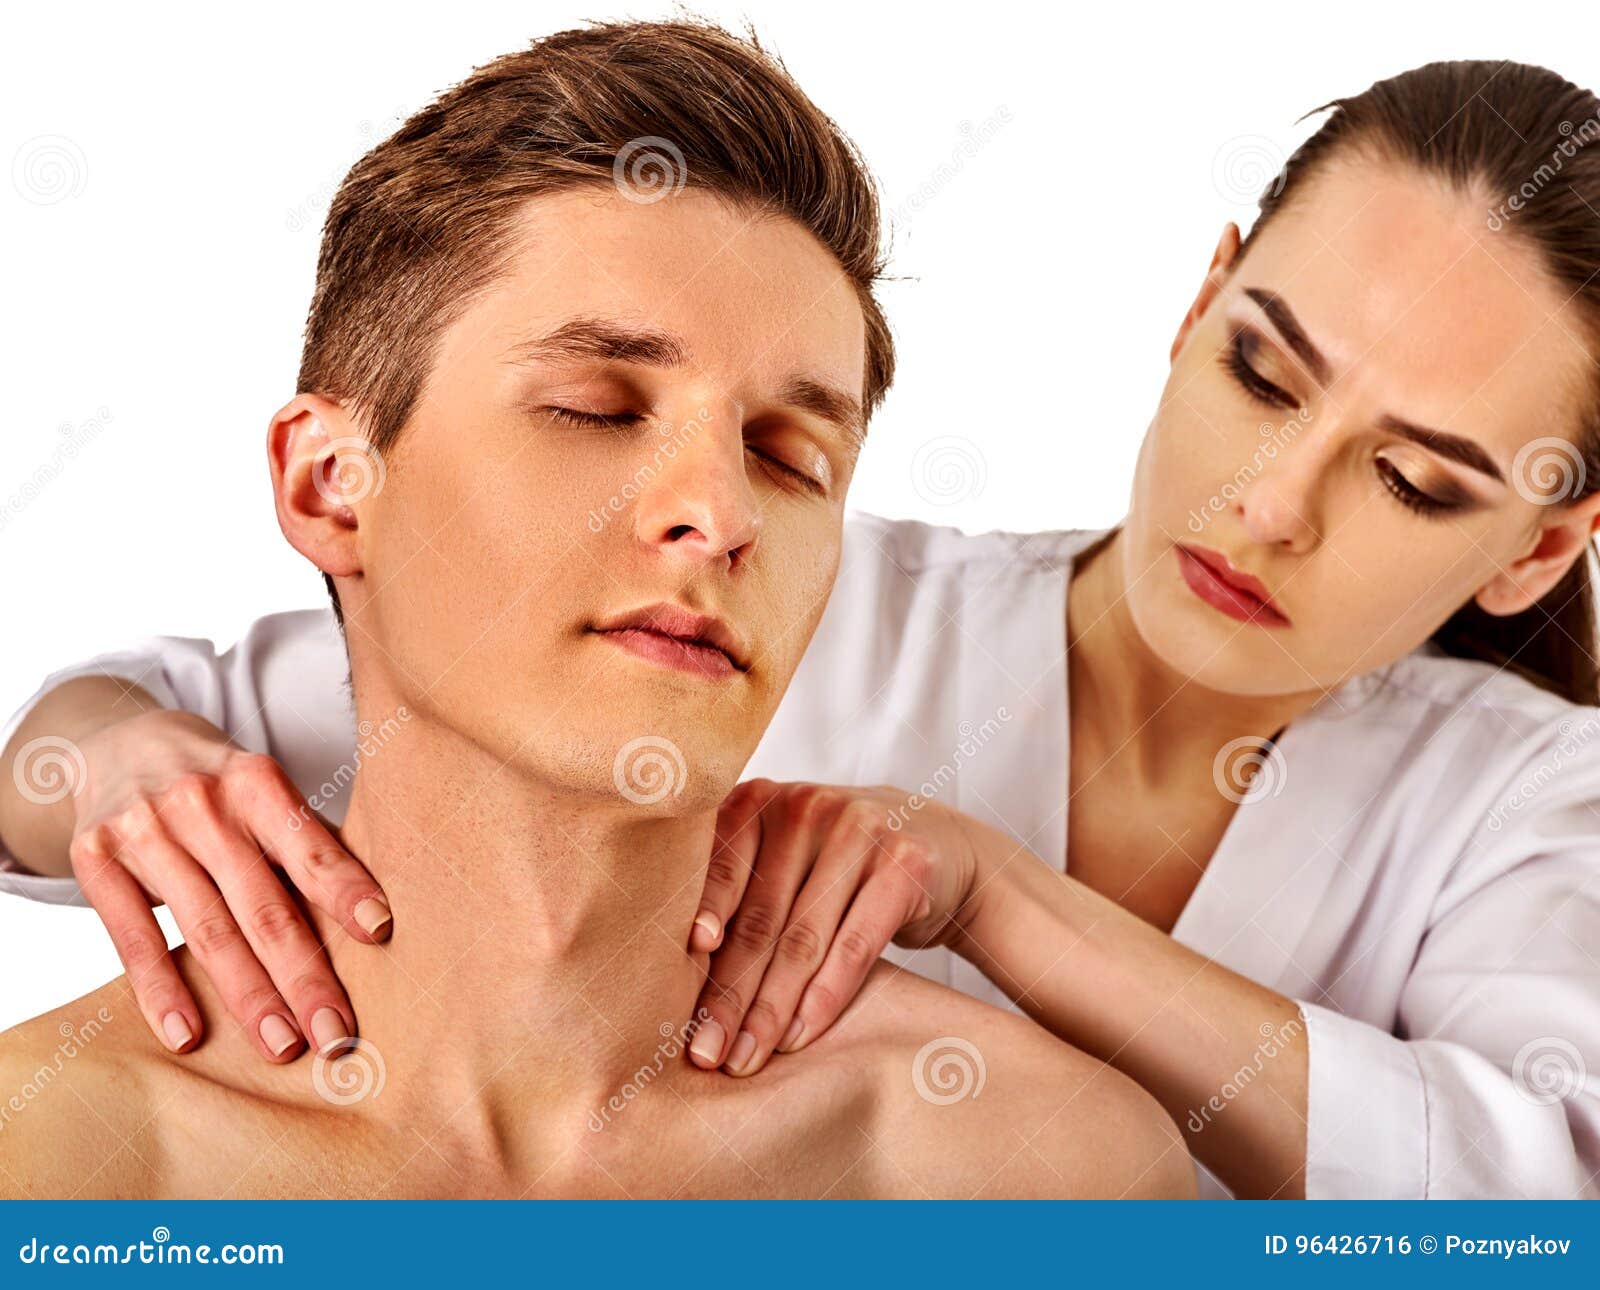 Shoulders guy when your a massages 3 Ways